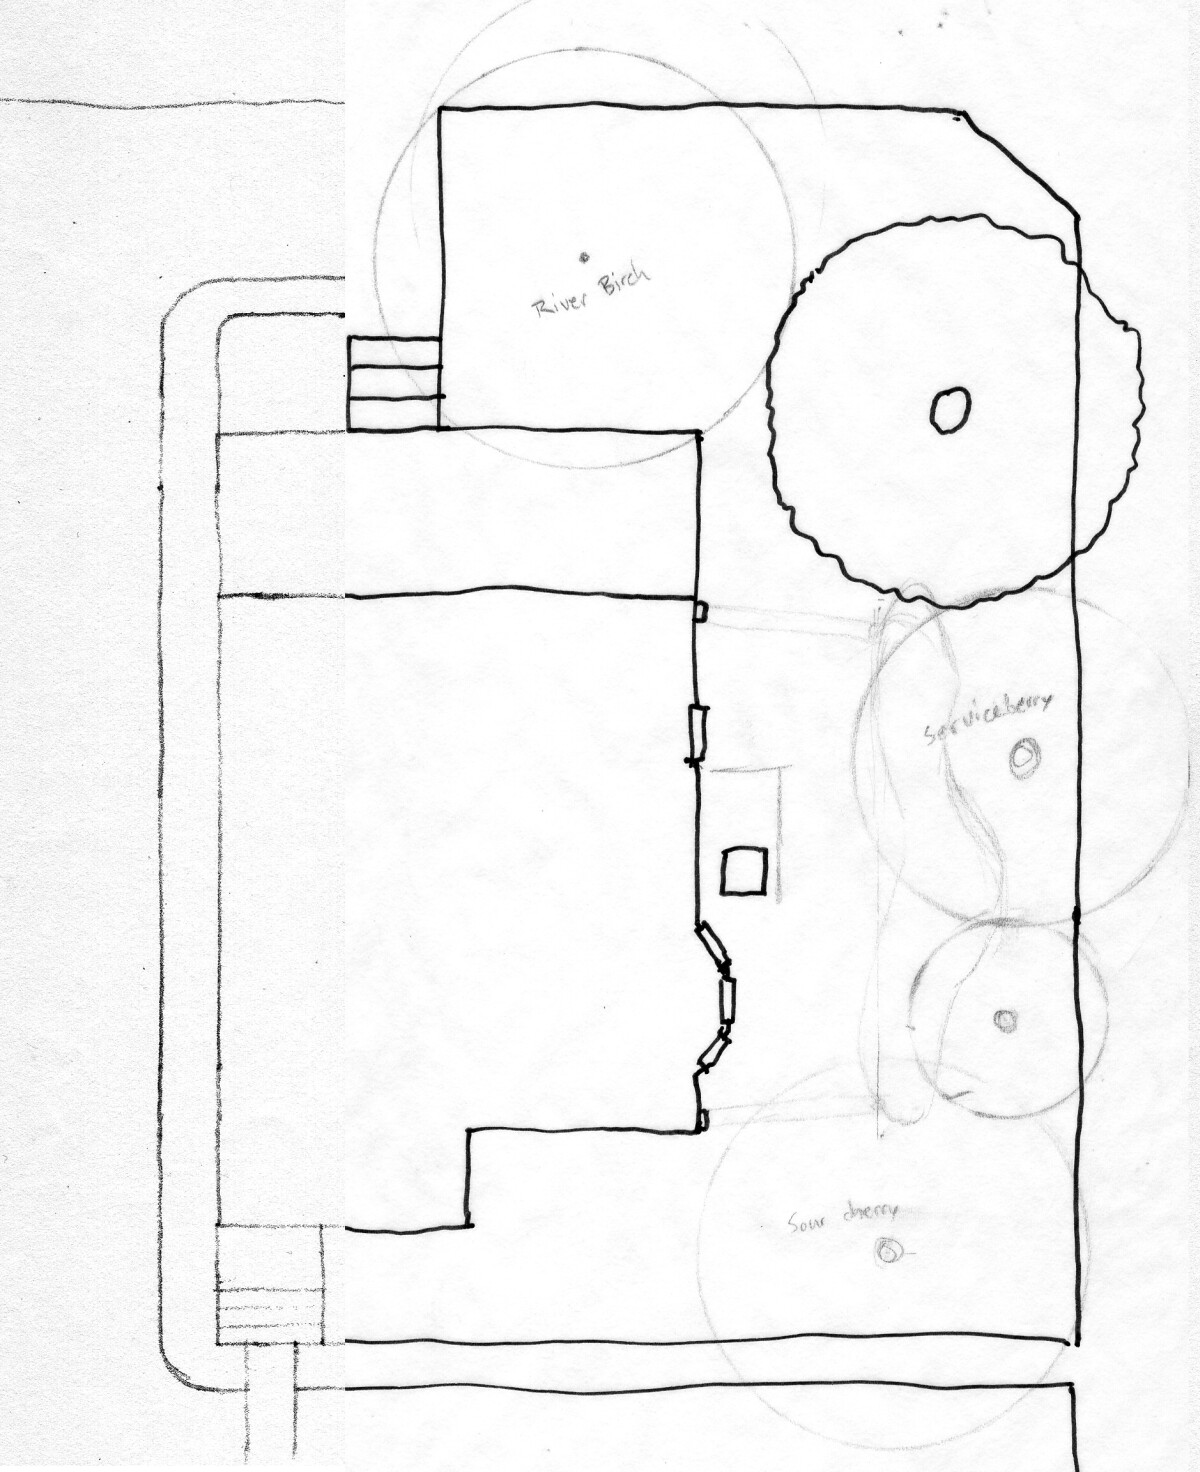 Sketch of a potential rain garden layout